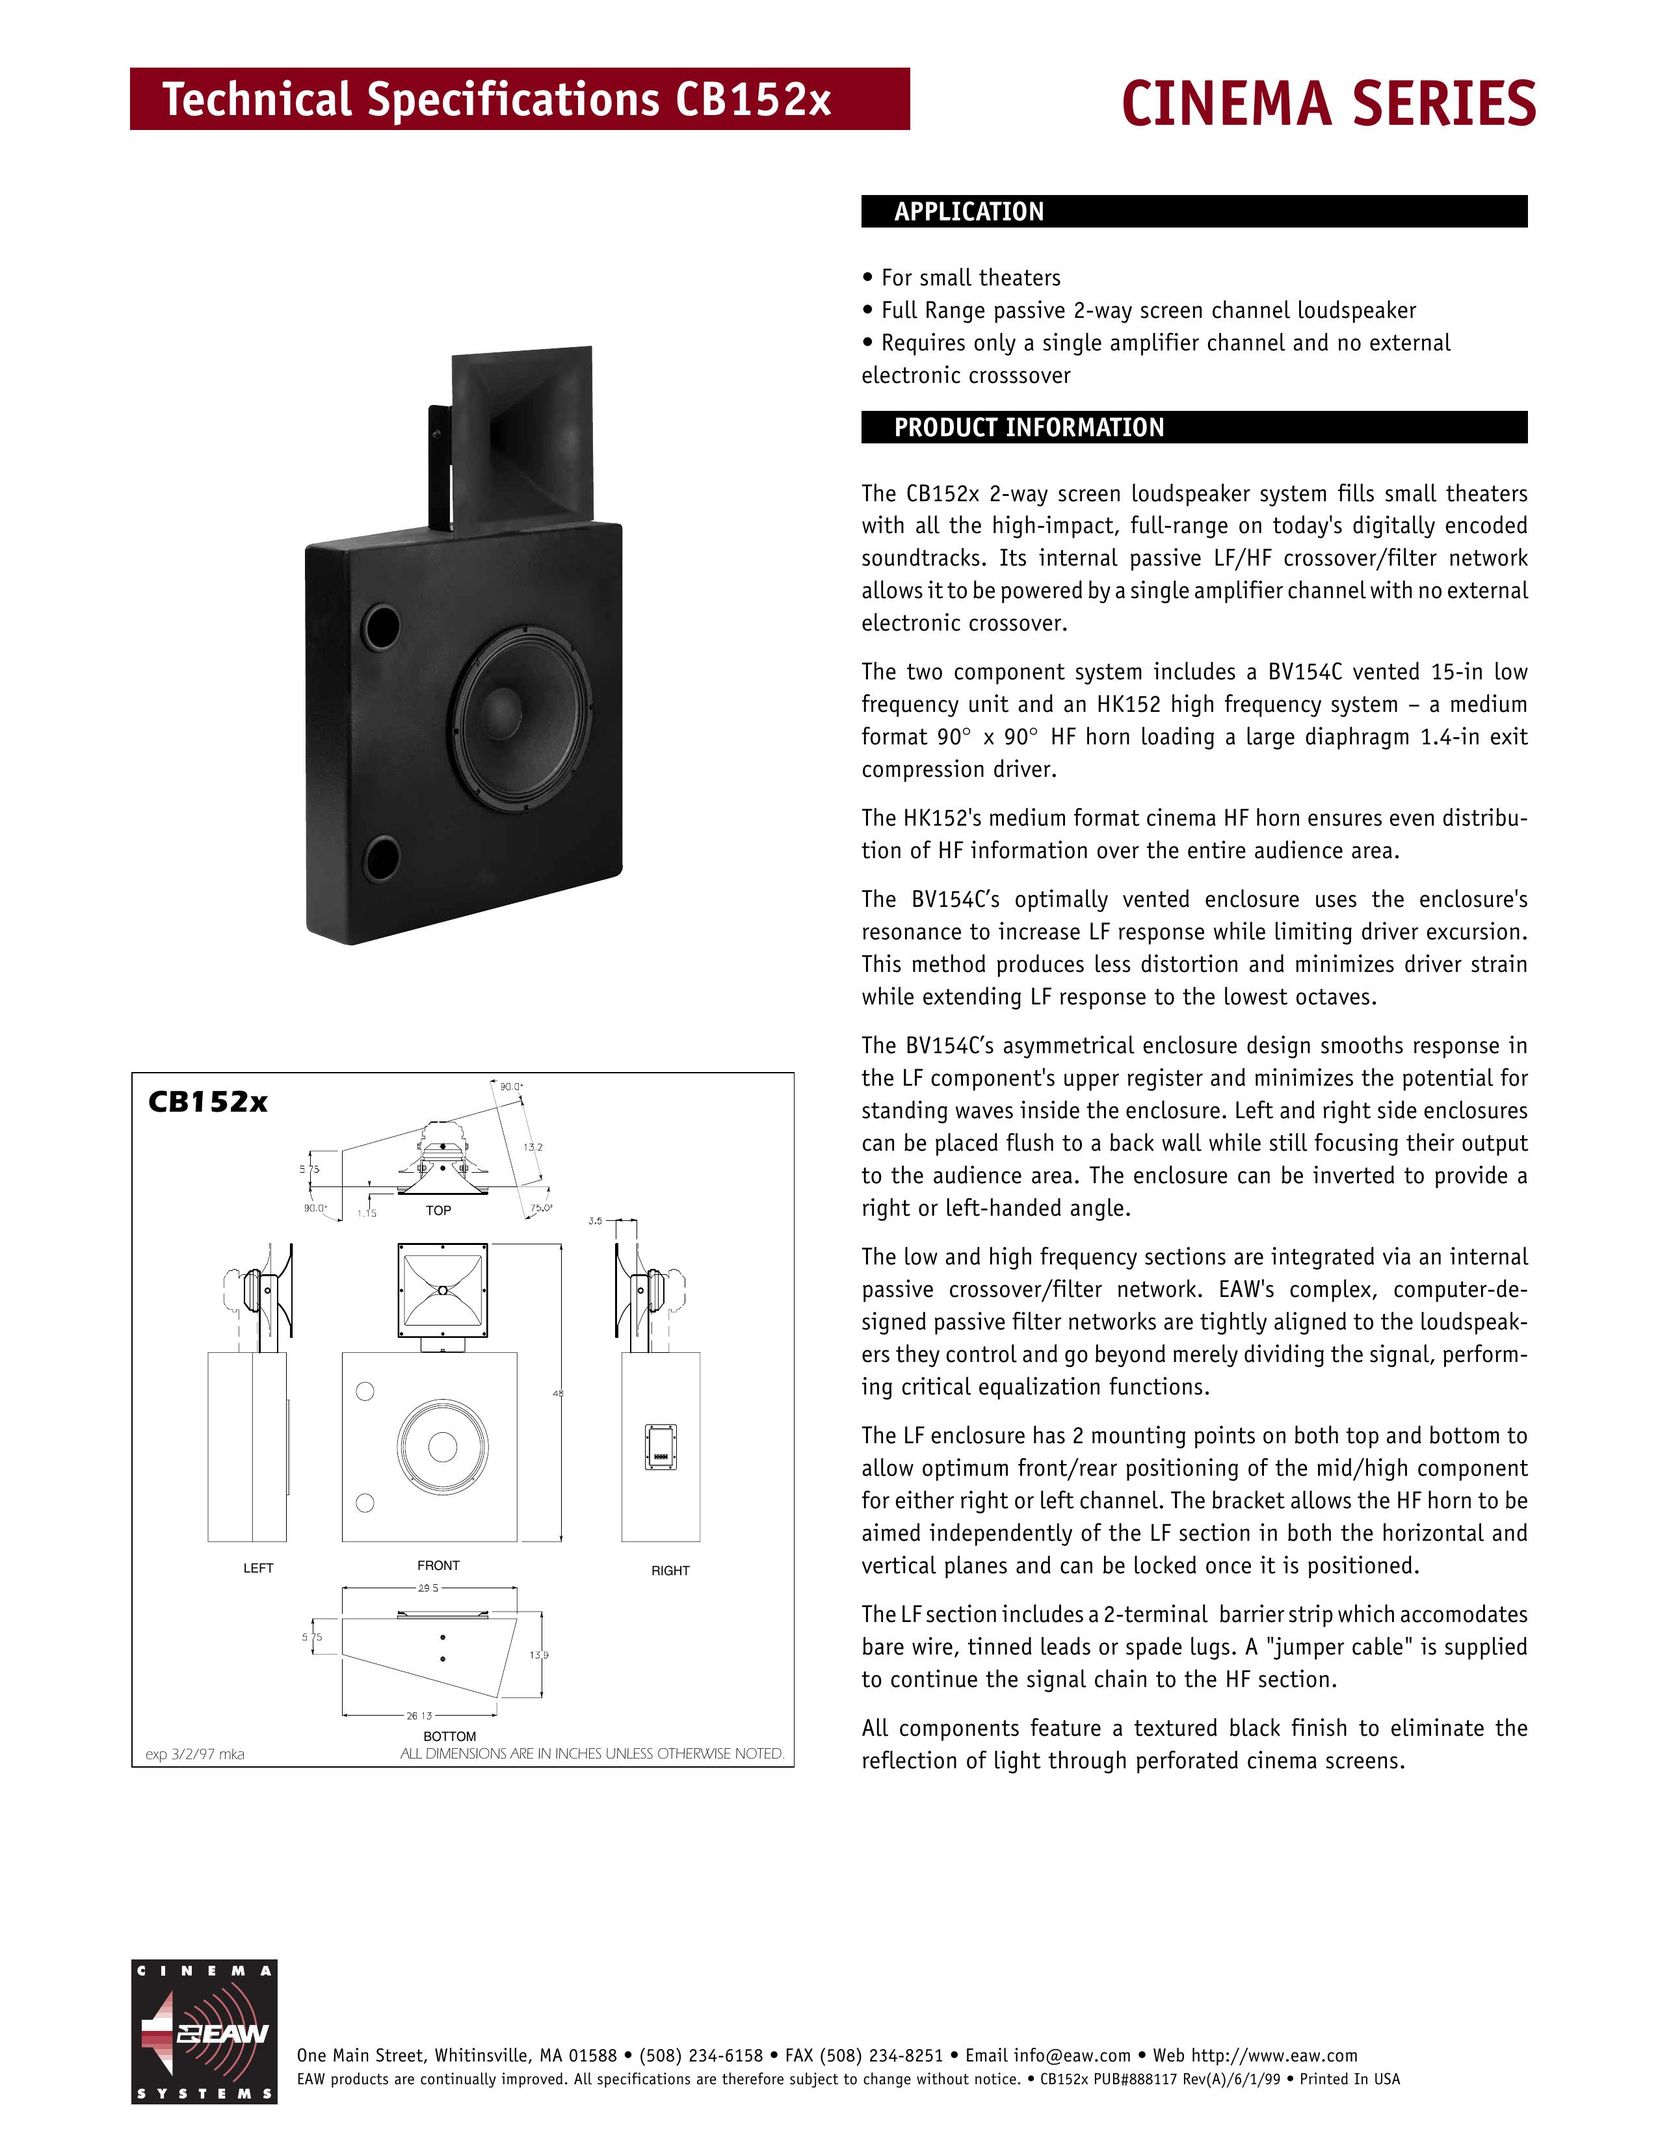 EAW CB152x Speaker System User Manual